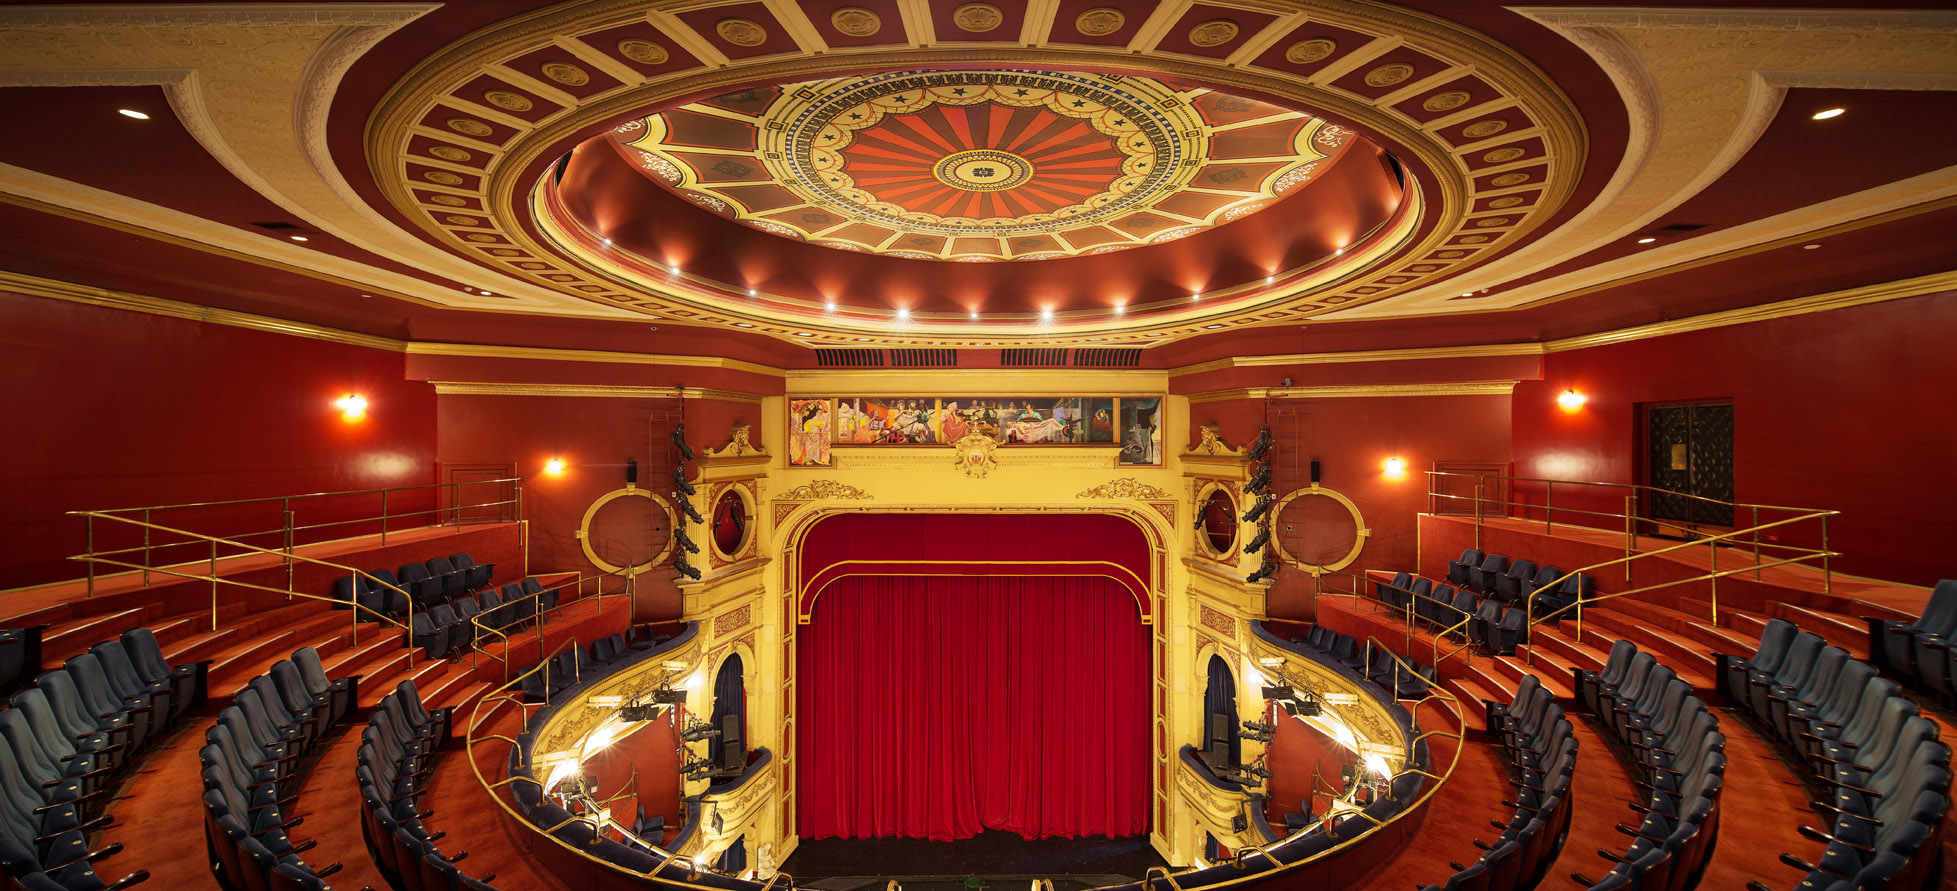 His Majesty's Theatre interior